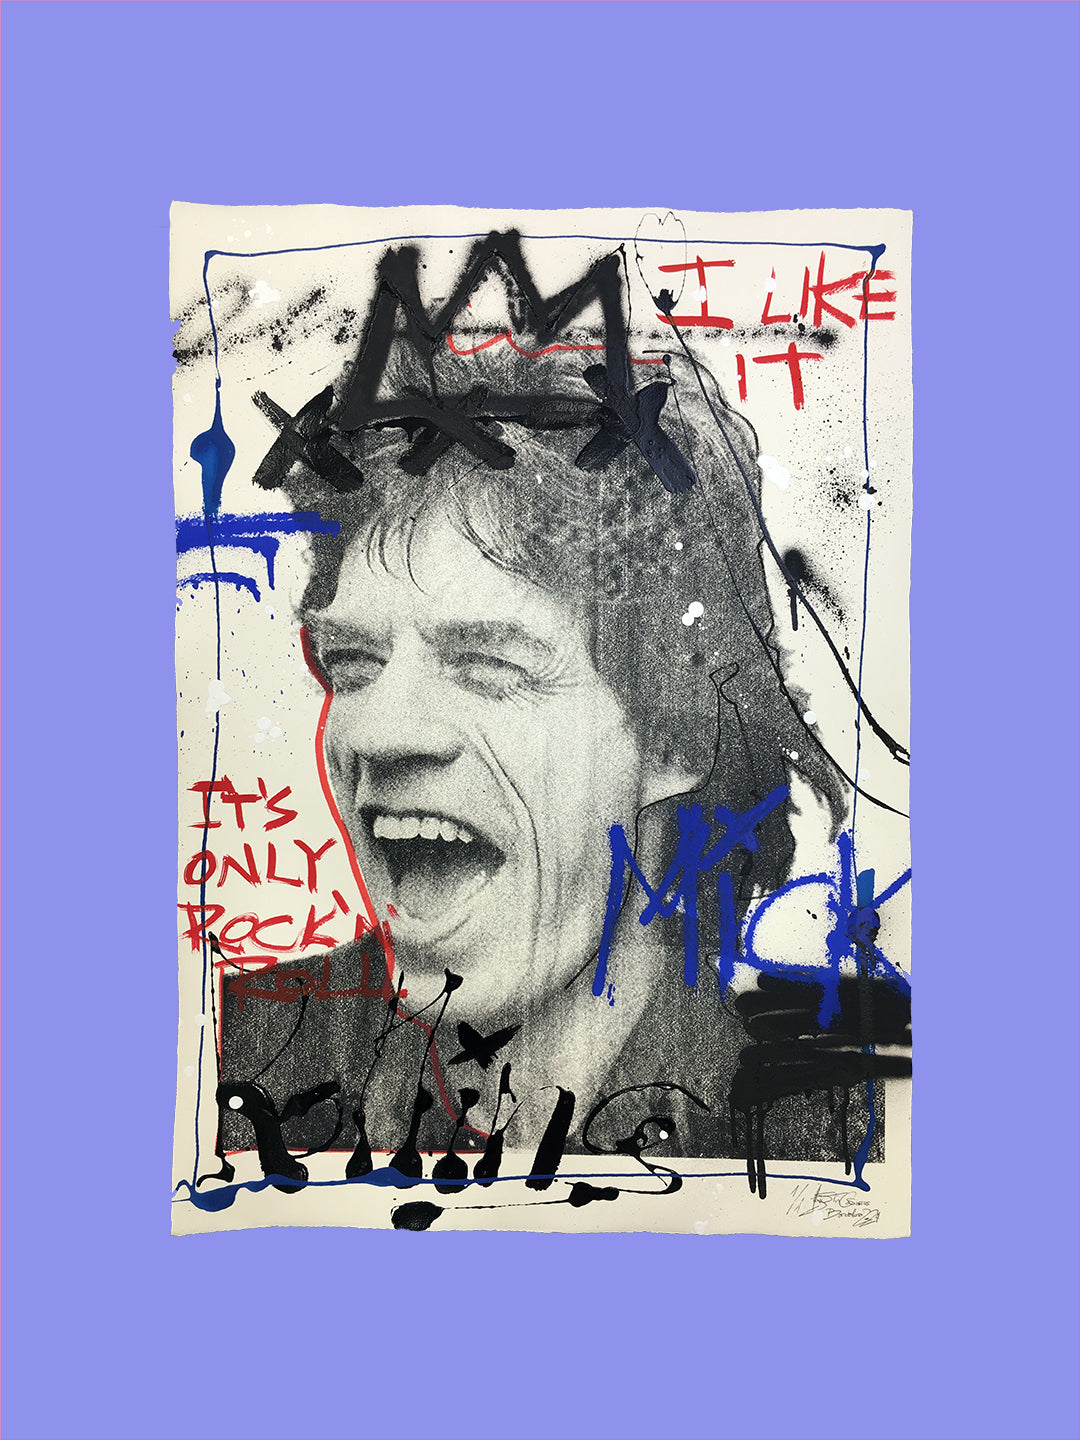 Mick Jagger, The Rolling Stones - Retrato print (original painting on paper) Arte Urbano Barcelona